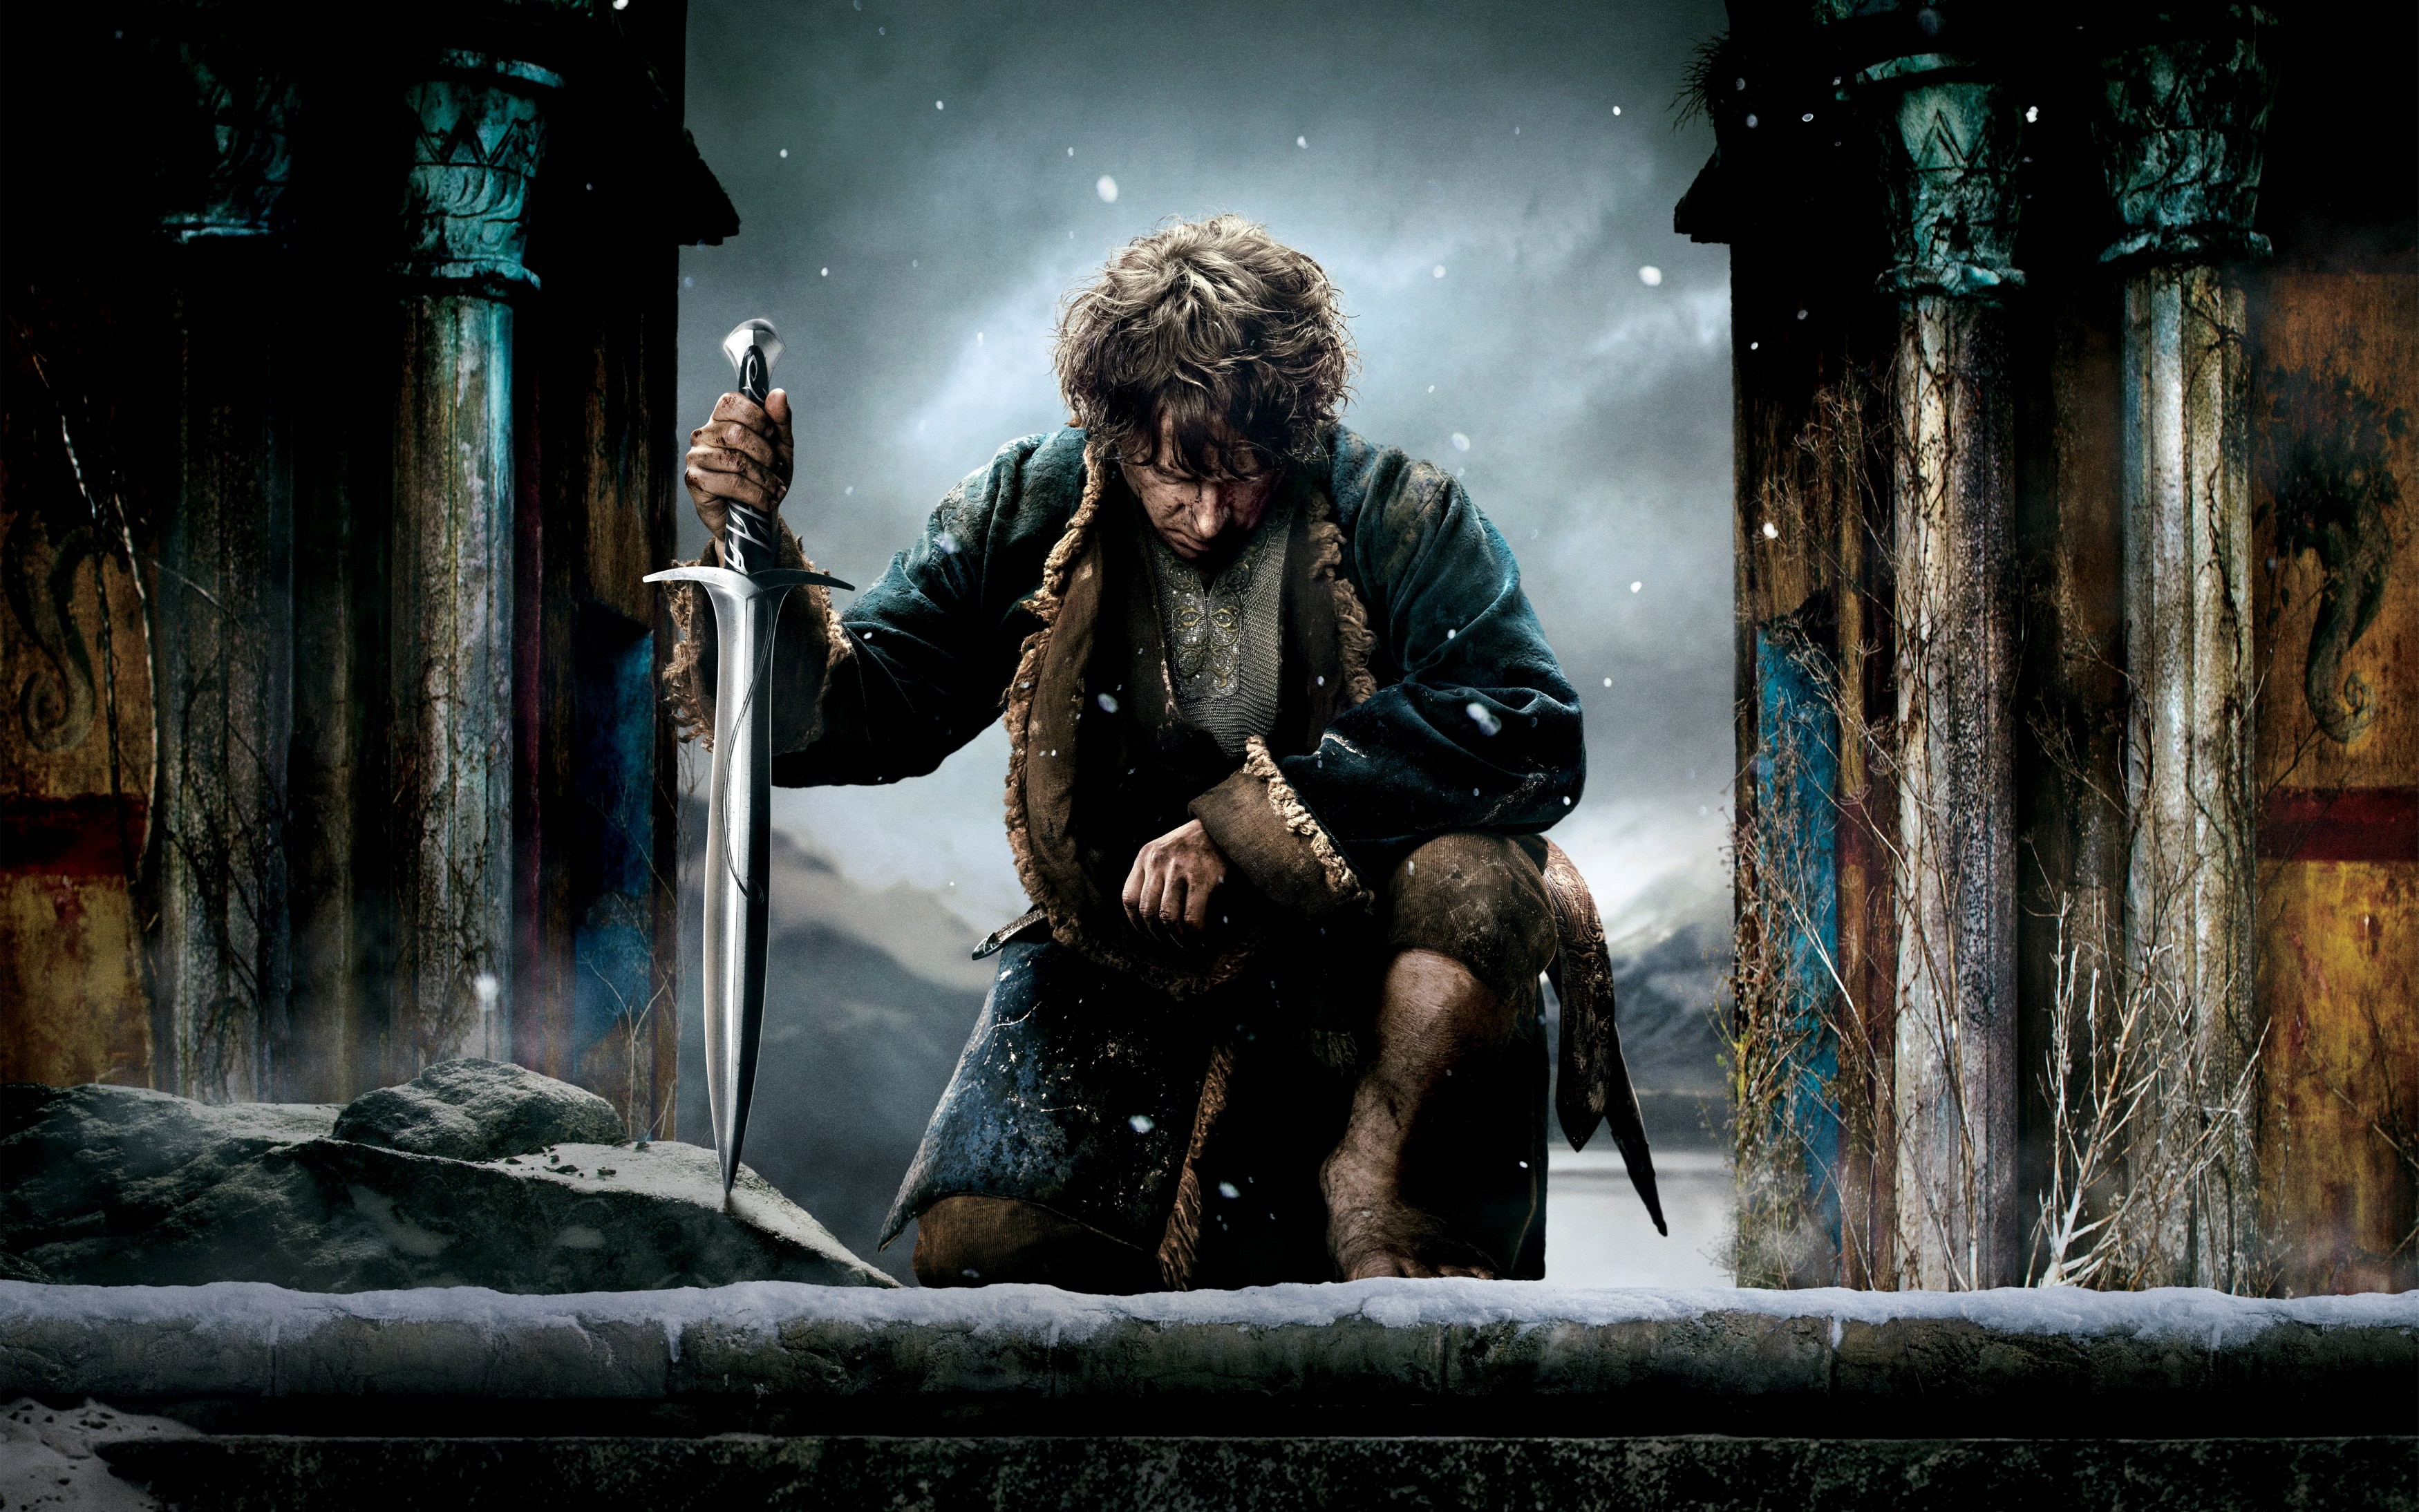 General 3500x2188 The Hobbit sword Bilbo Baggins Sting Martin Freeman The Hobbit: The Battle of the Five Armies movies digital art